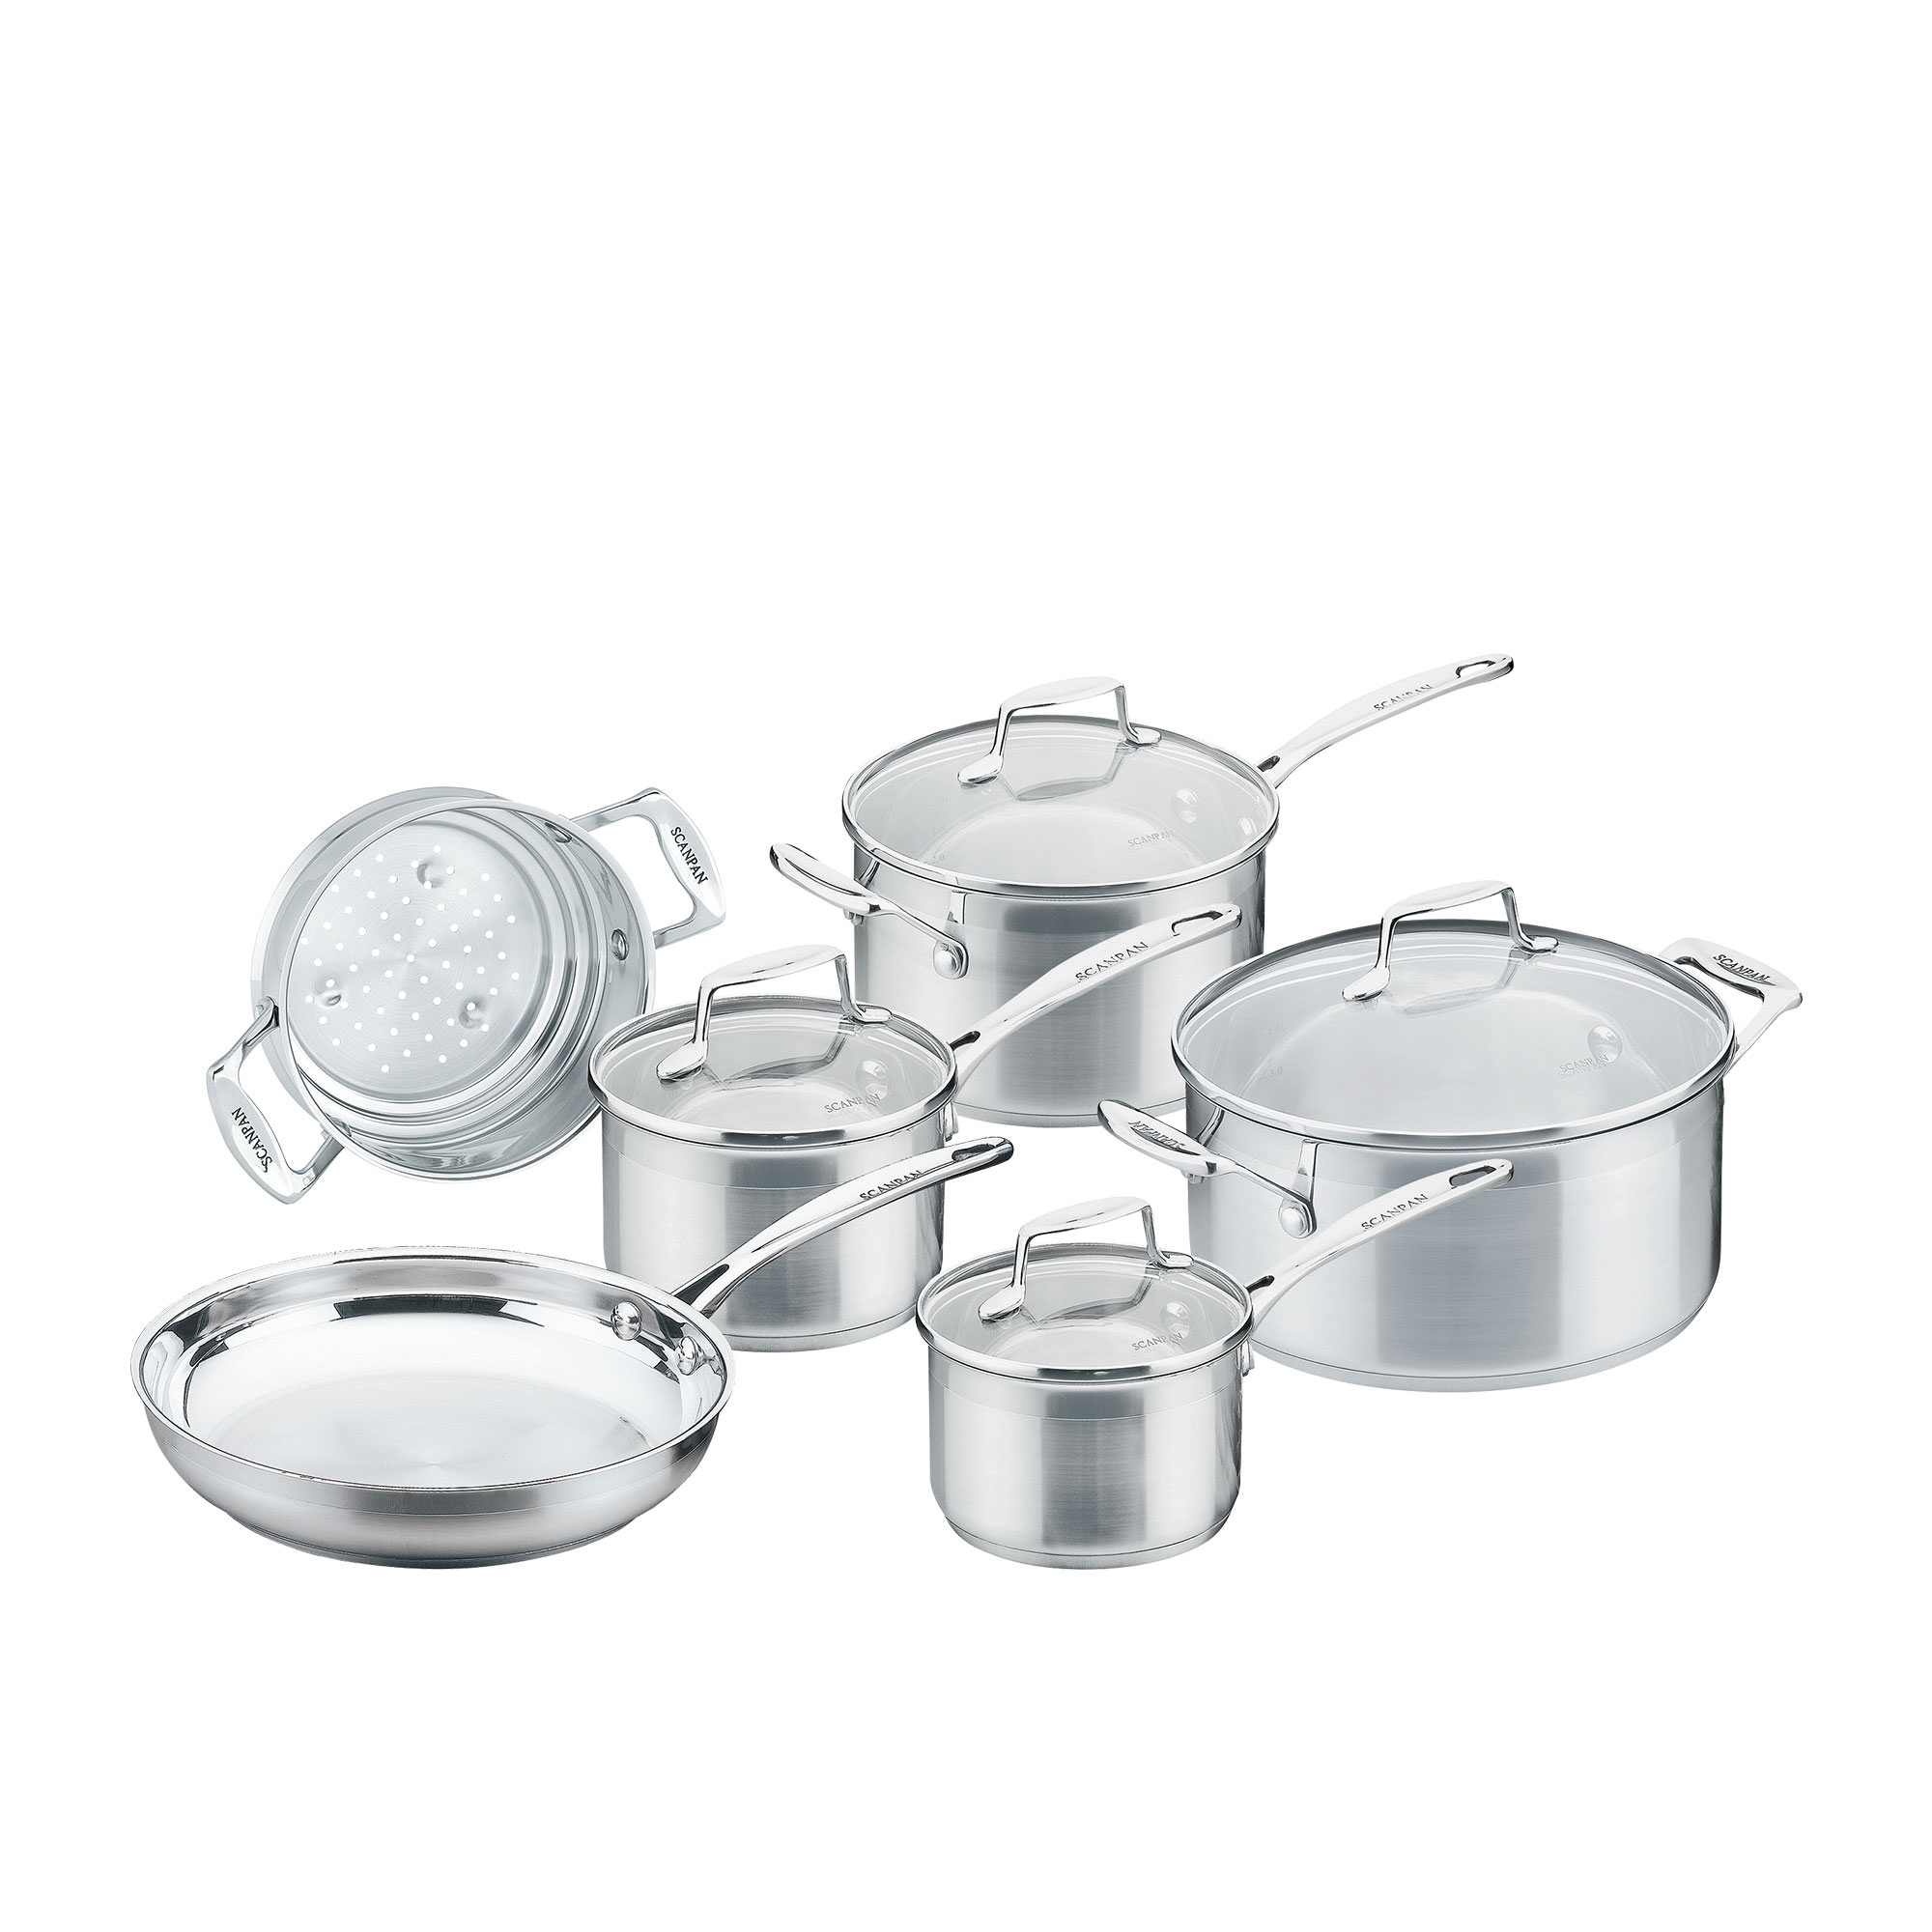 Scanpan Impact 6pc Stainless Steel Cookware Set Image 1